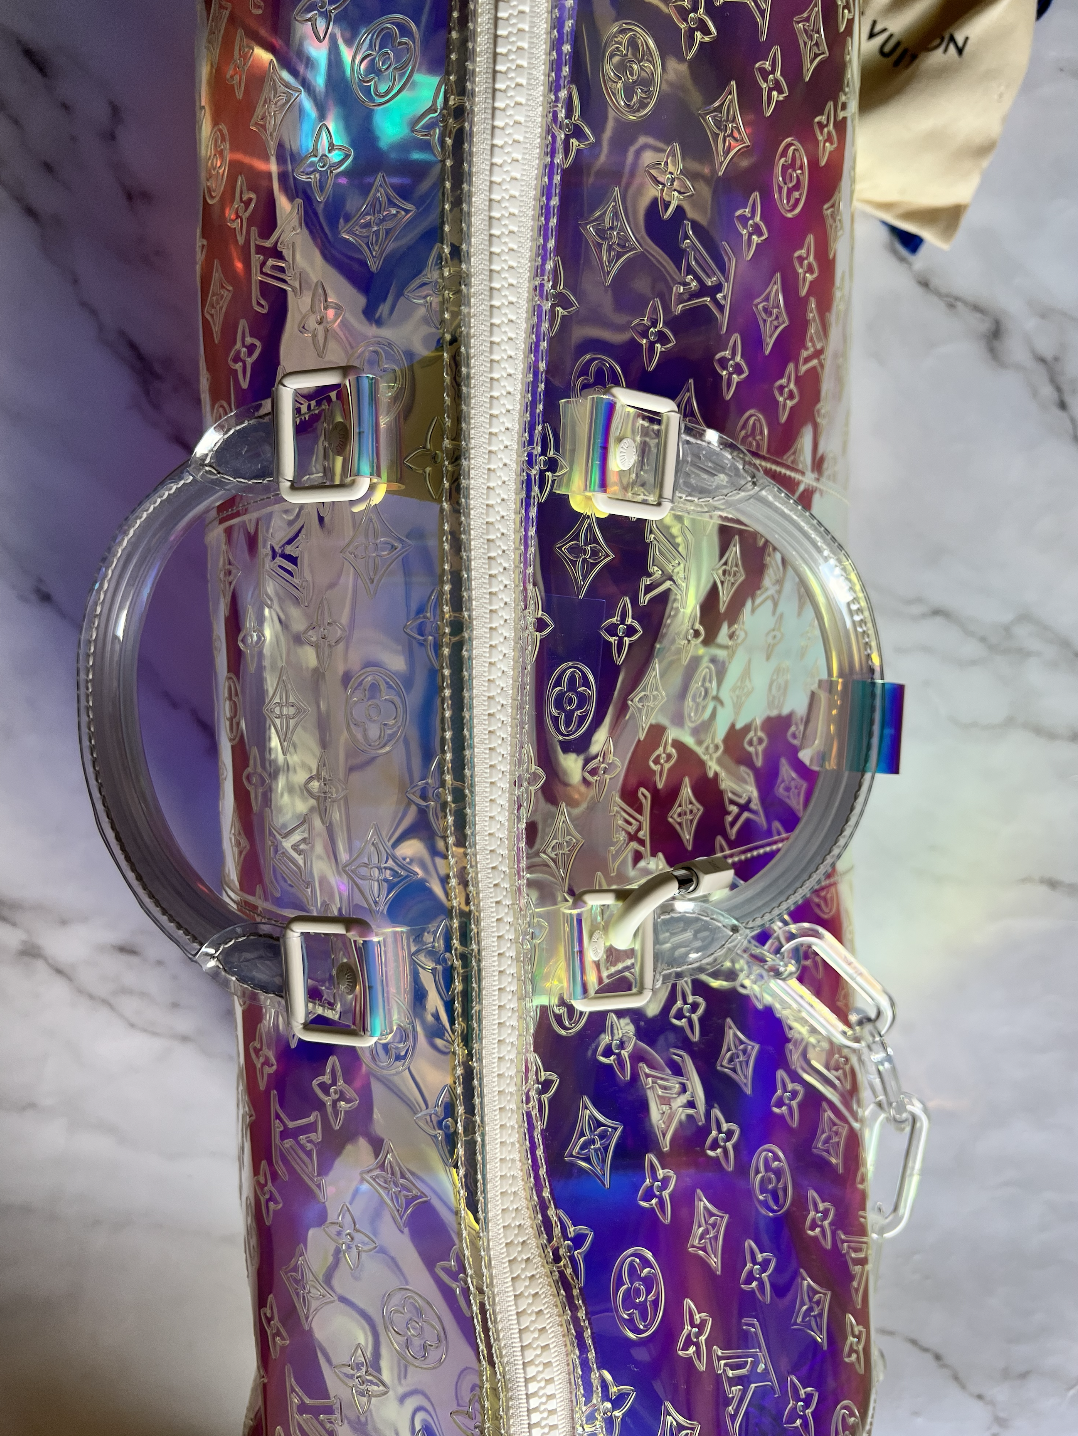 Louis Vuitton Keepall Ss19 Hologram Prism 50 Bandouliere 870370 Travel Bag